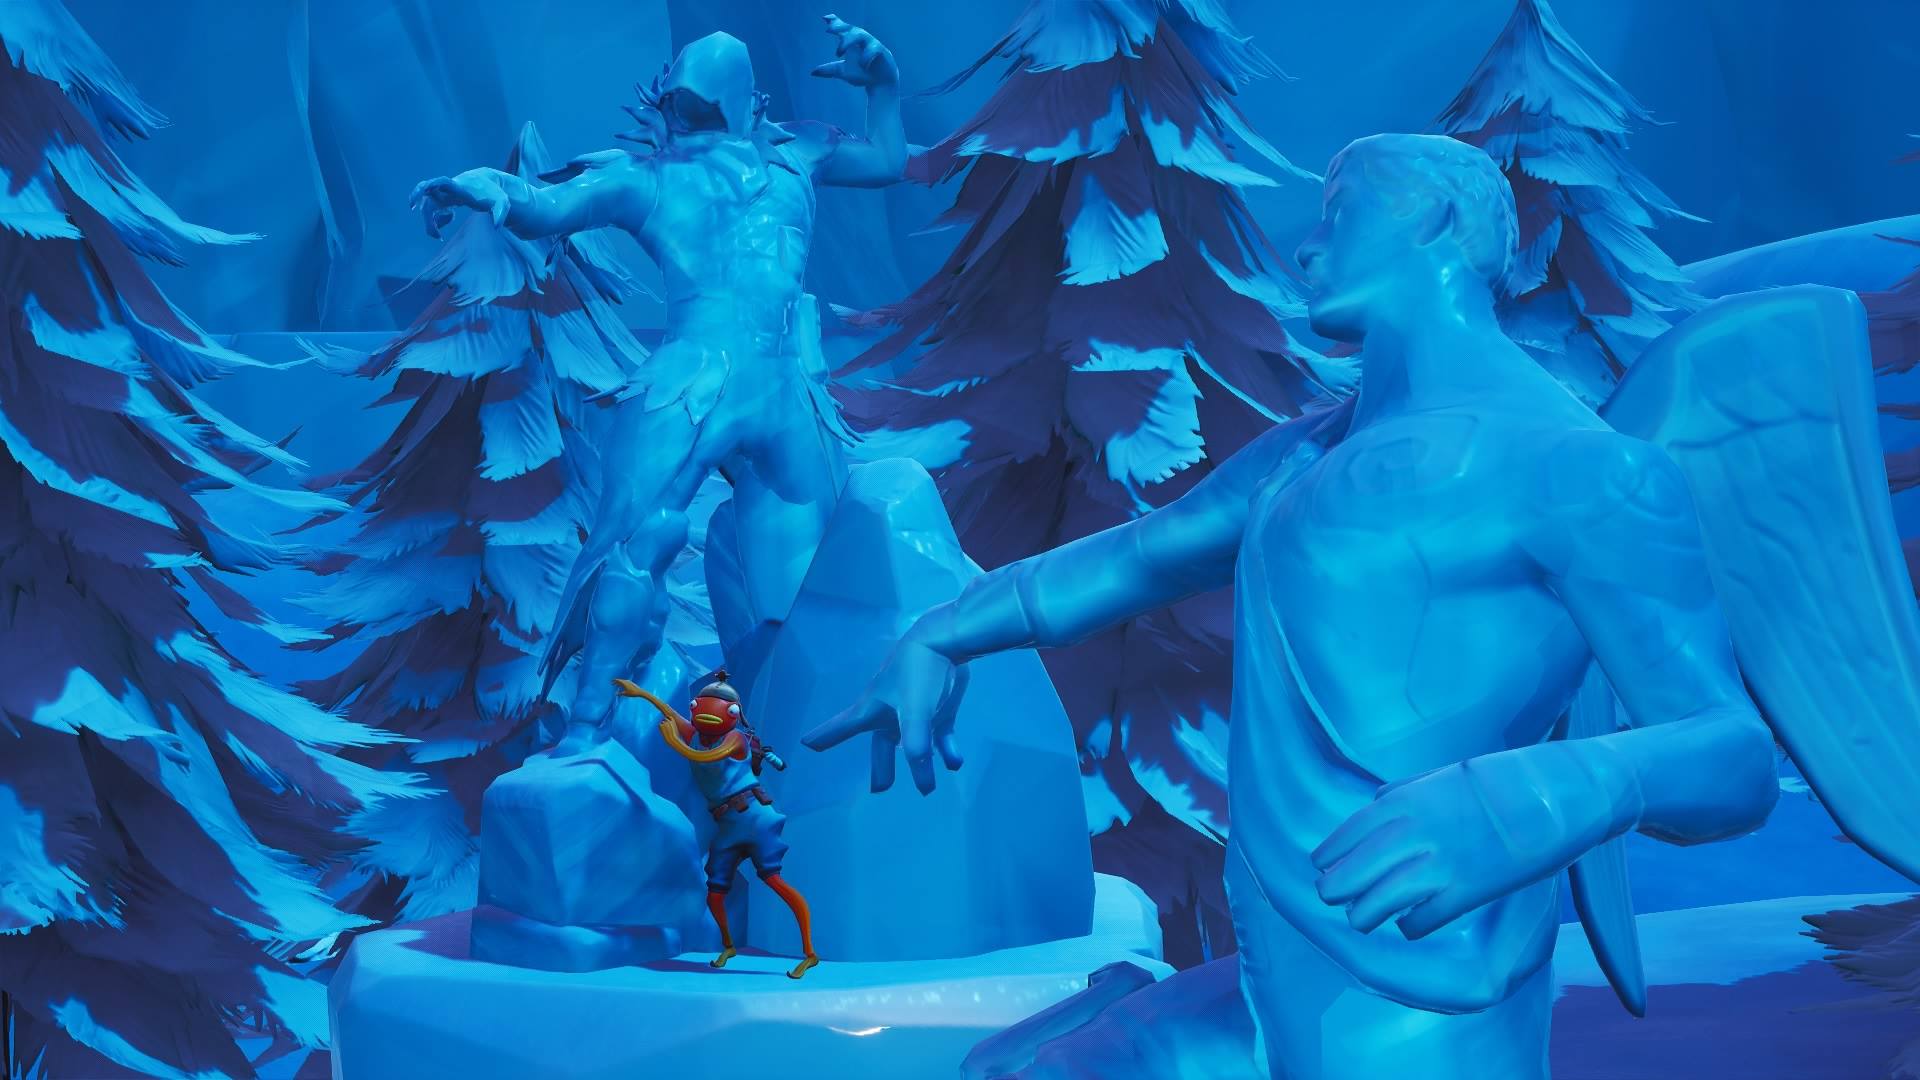 fortnite dance between ice sculptures dinosaurs hot springs locations inverse - fortnite season 8 week 9 ice sculptures